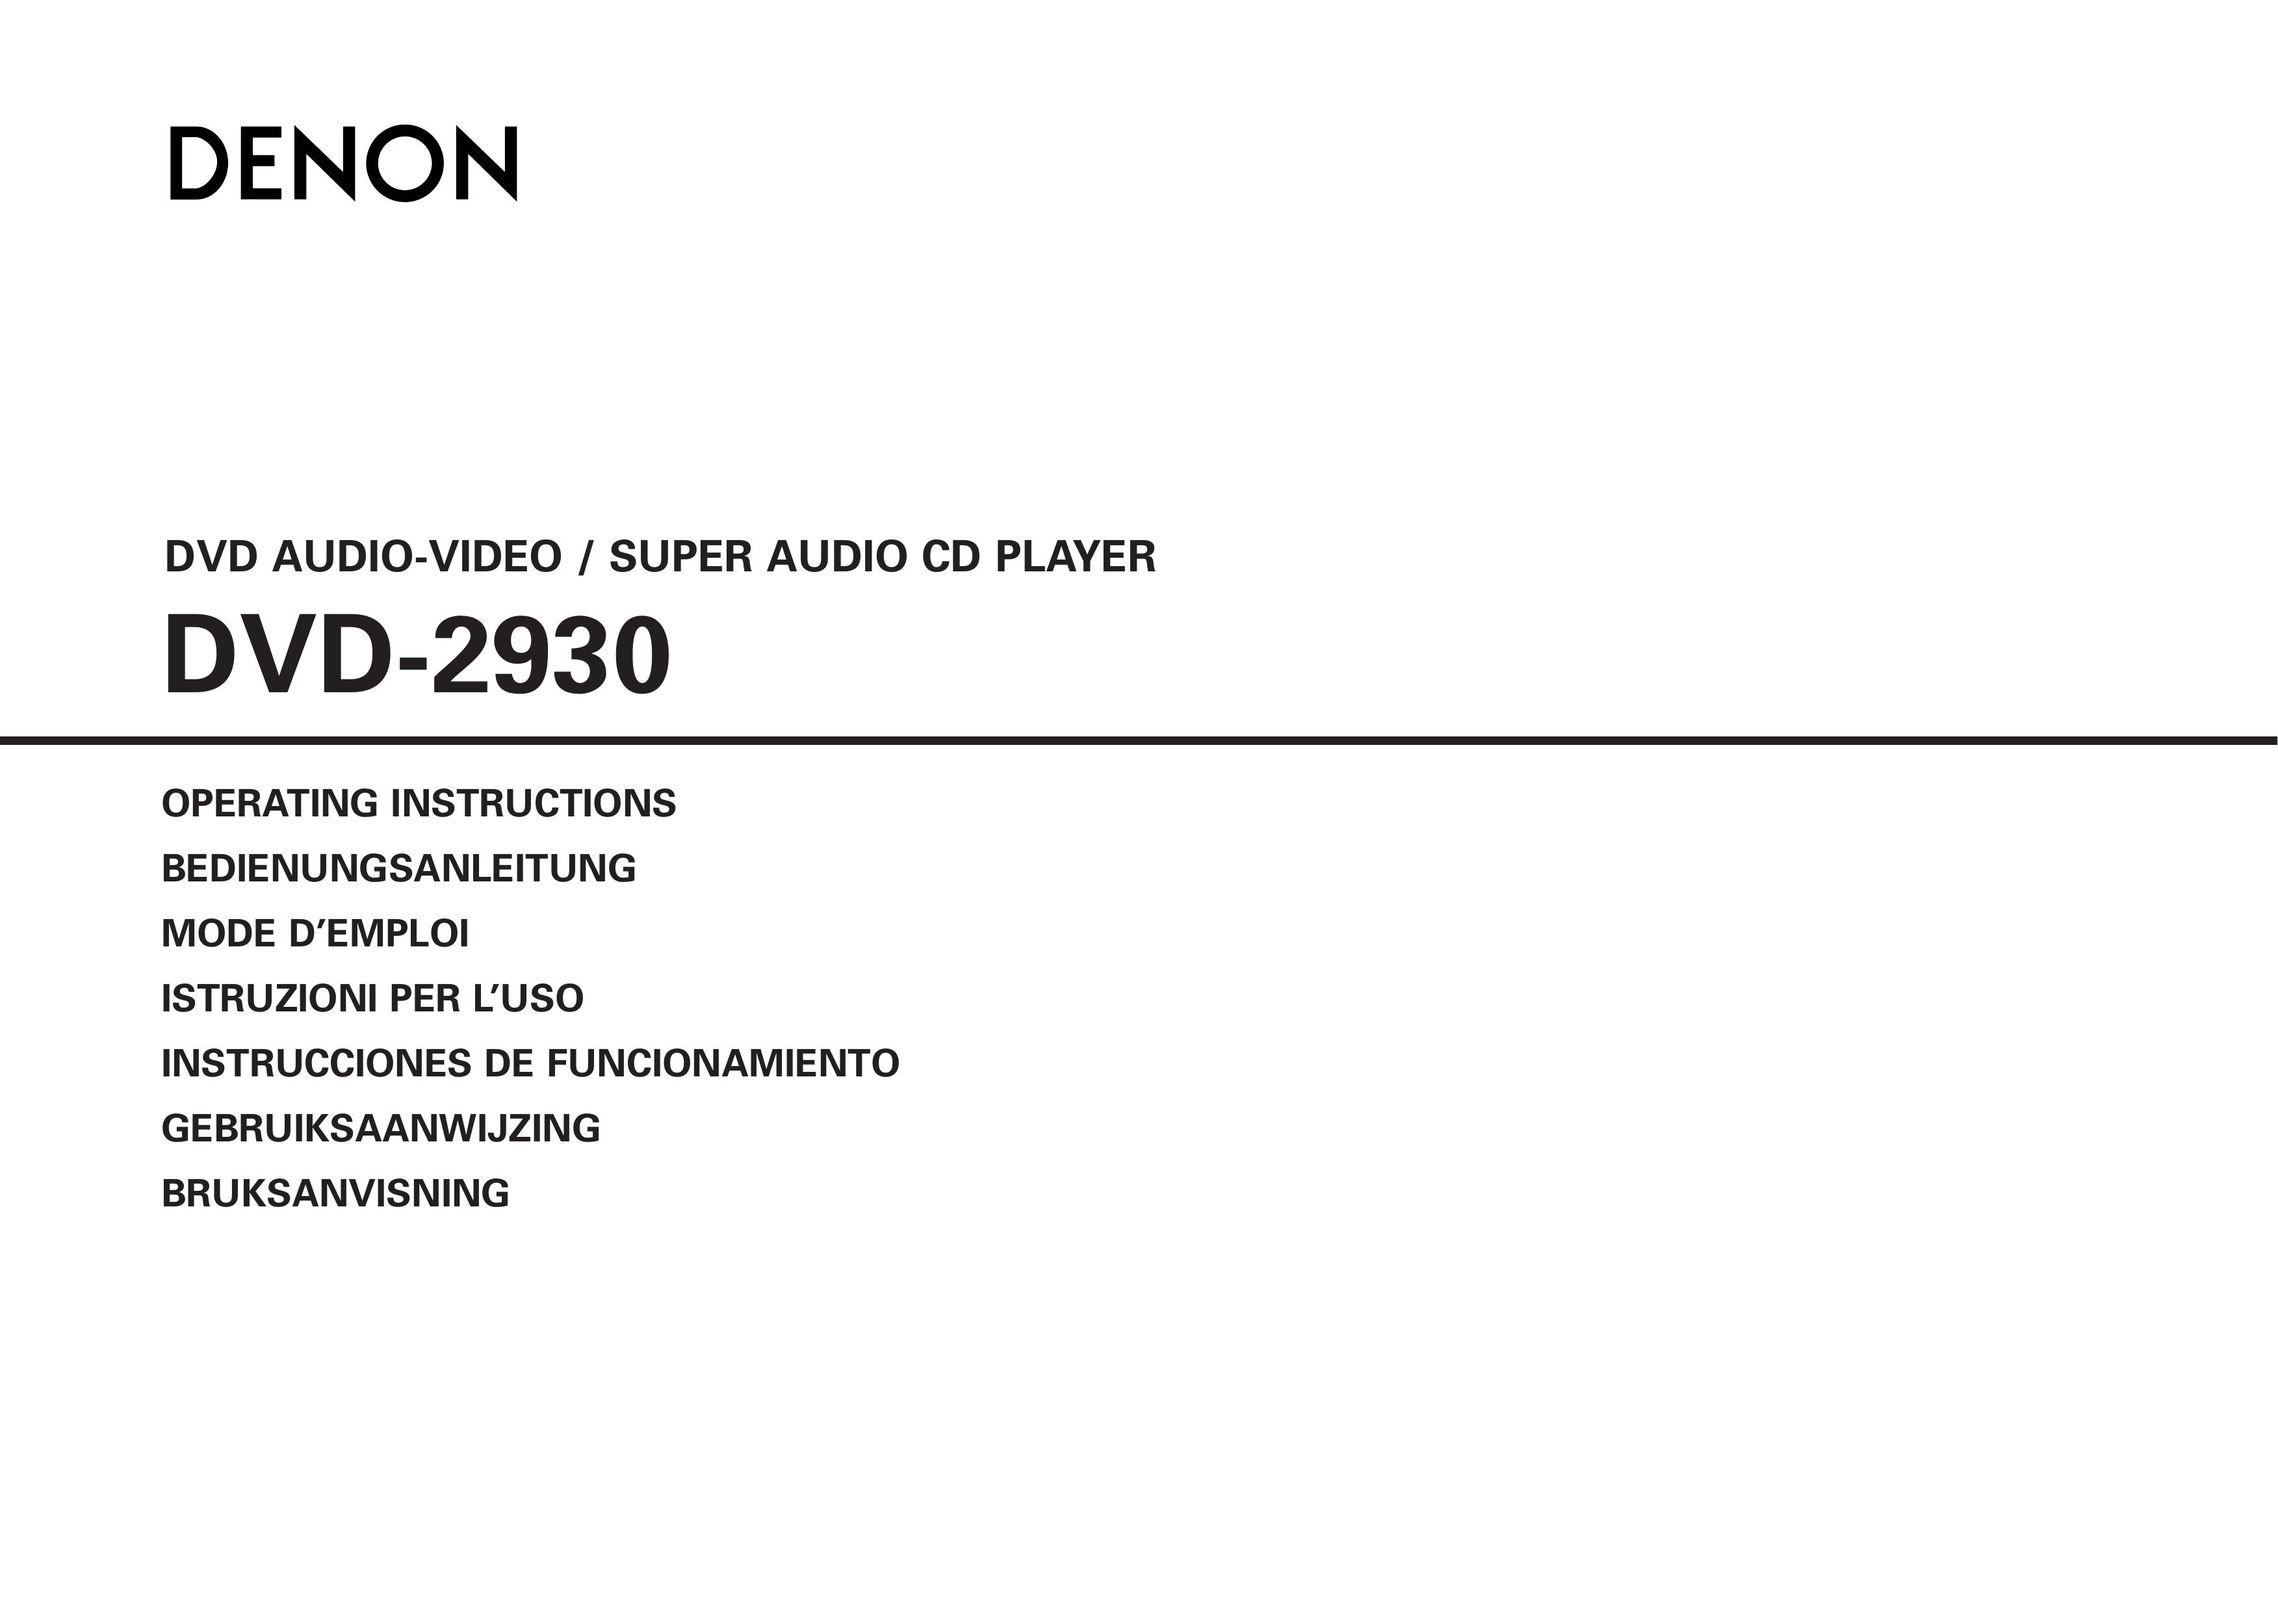 Denon DVD-2930 DVD Player User Manual